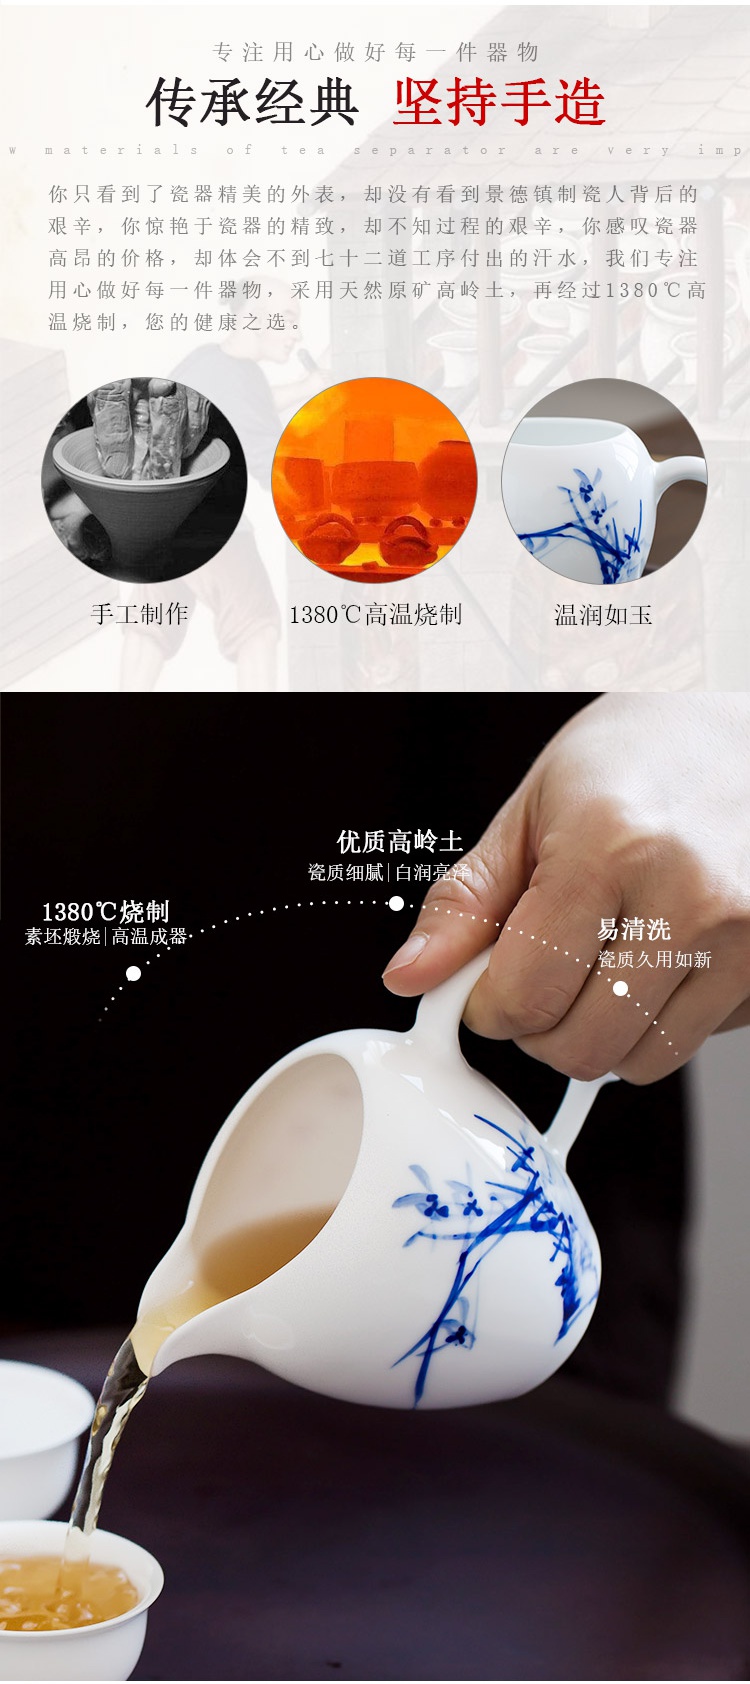 The Poly real scene of jingdezhen blue and white porcelain hand - made fair keller kung fu tea special tea tea ware ceramic tea sea